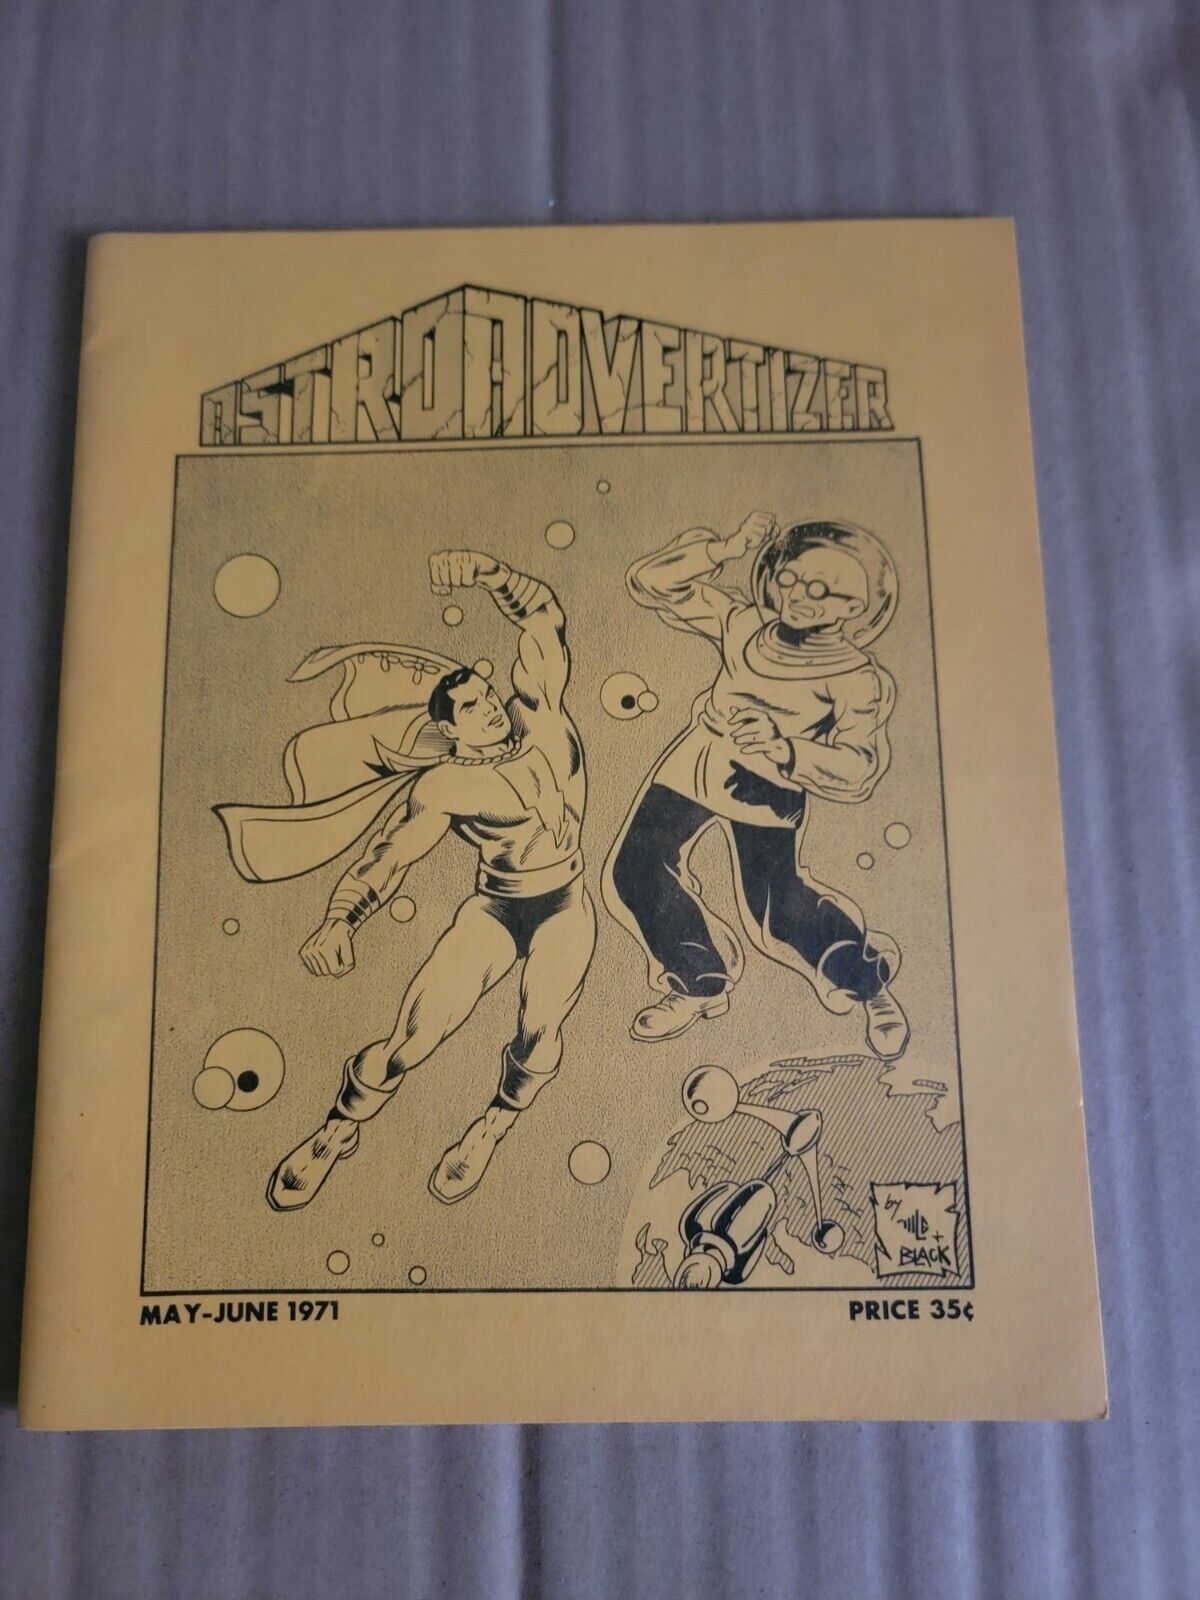 ASTRO ADVERTISER #2 May - June 1971 Comic Book Fantasy Fanzine Captain Marvel